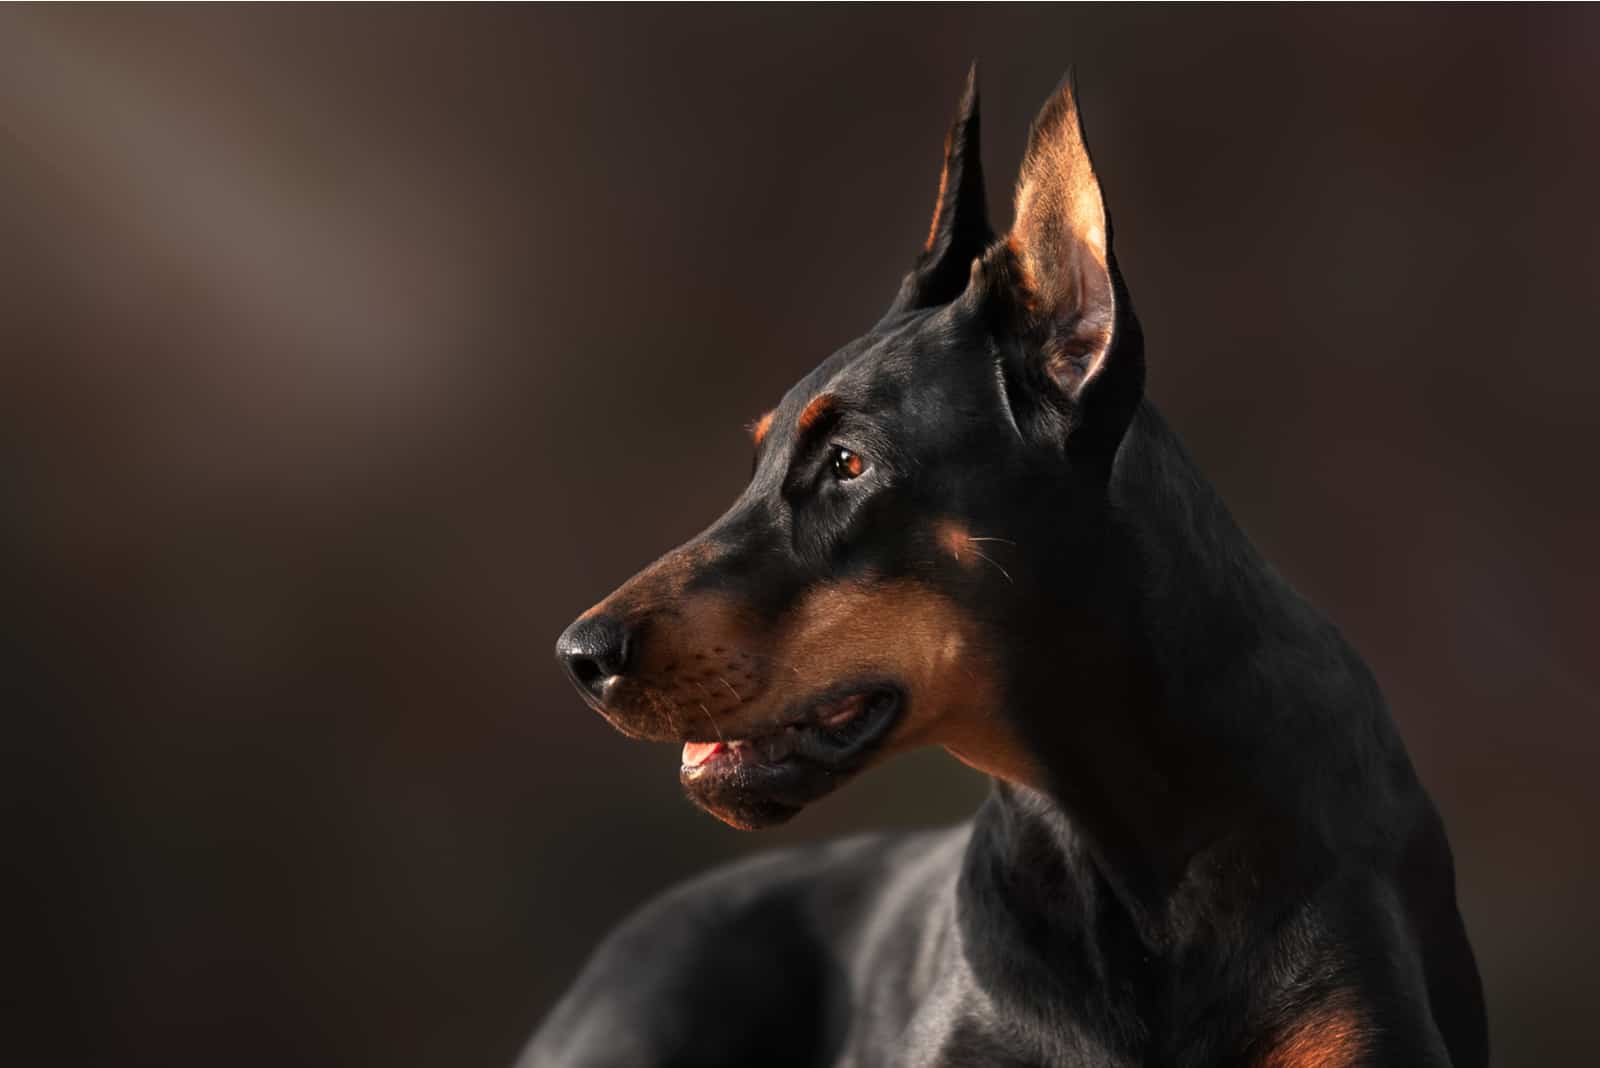 portrait of black dog